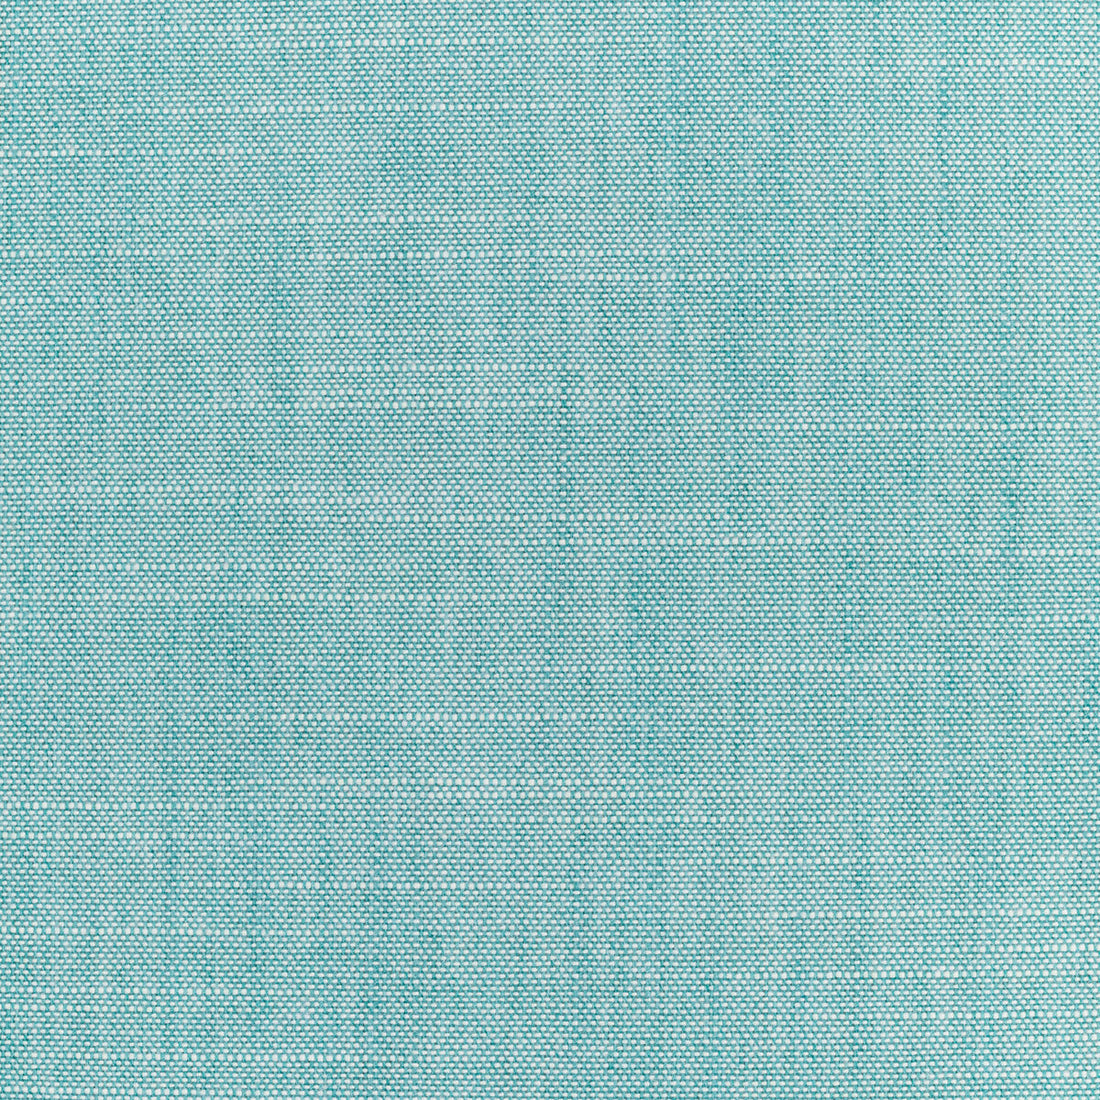 Kravet Smart fabric in 36112-113 color - pattern 36112.113.0 - by Kravet Smart in the Performance Kravetarmor collection